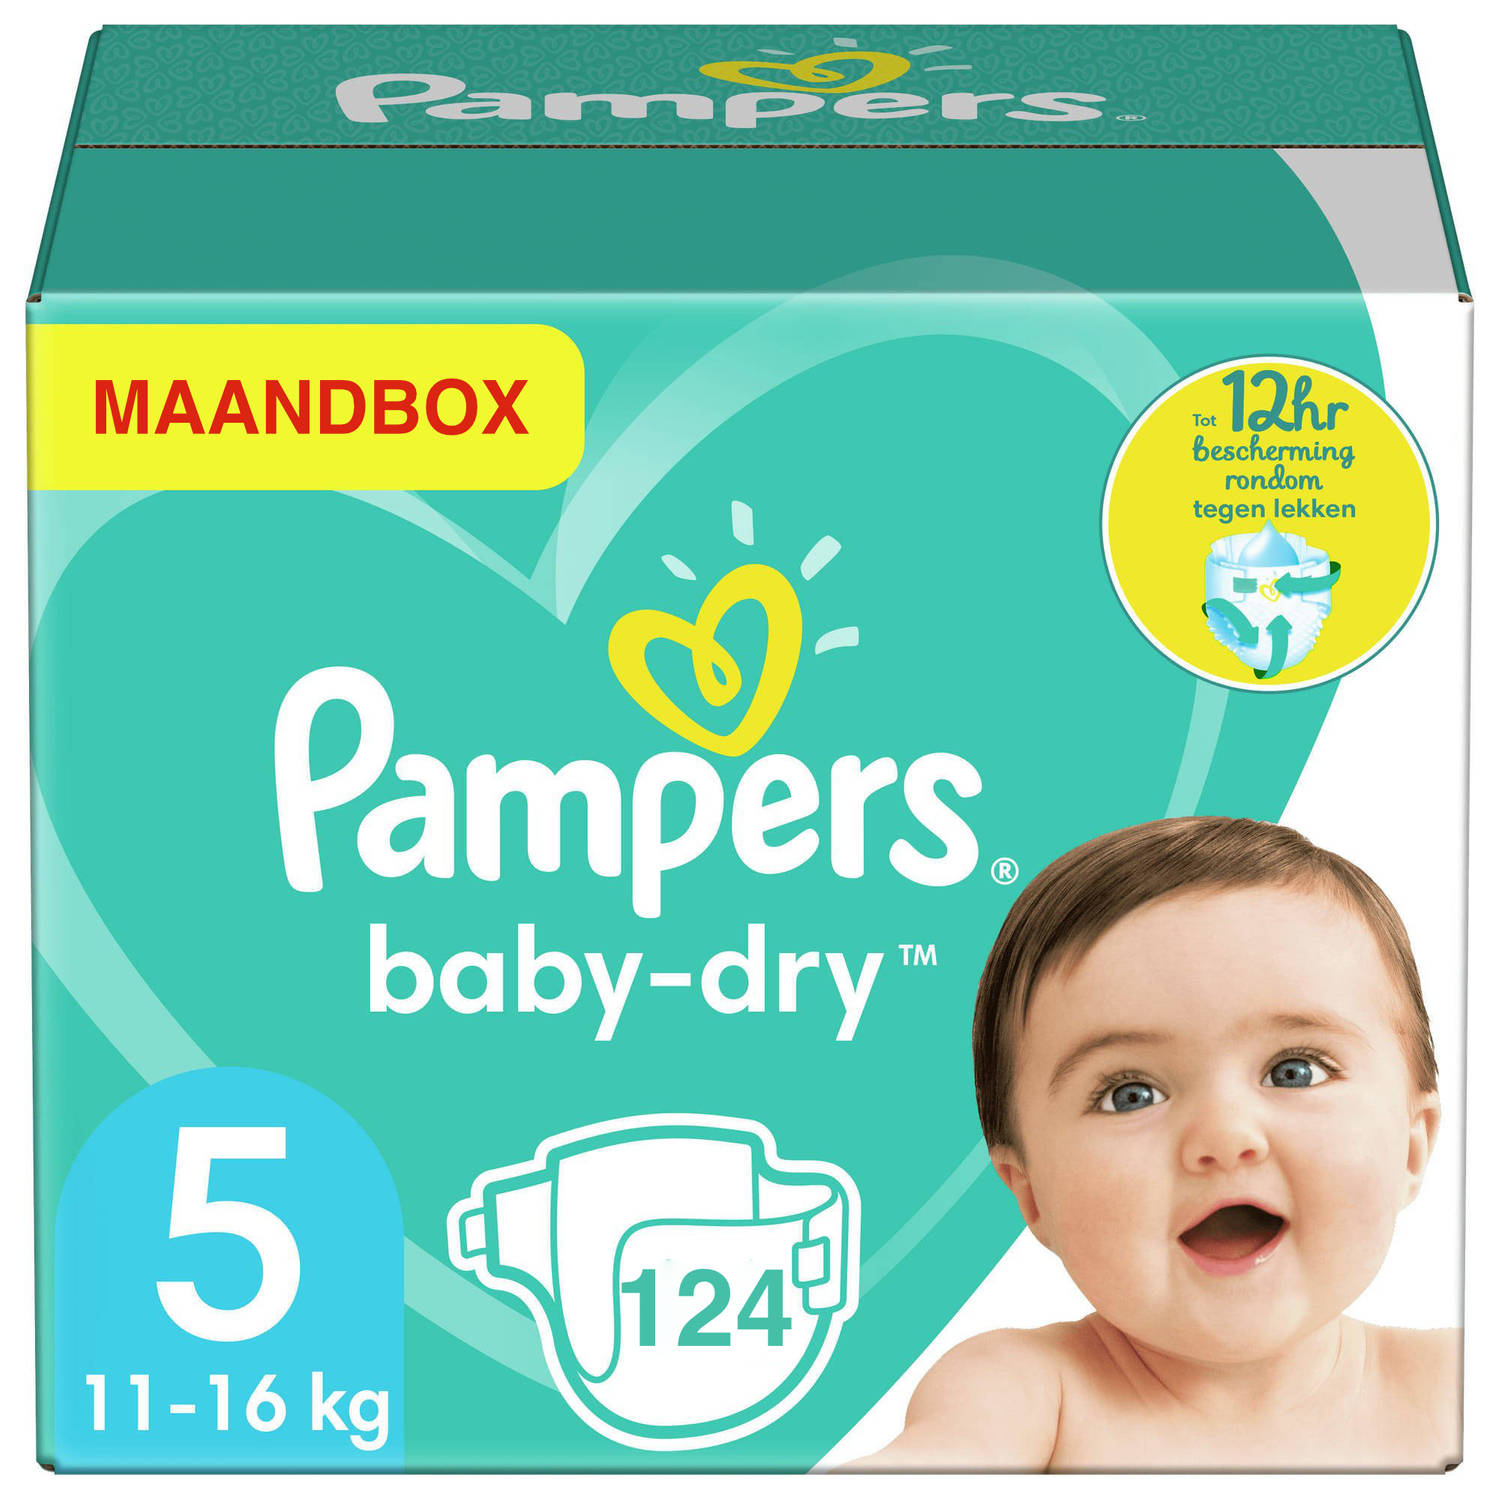 Wegenbouwproces Roestig Stoutmoedig Pampers - Baby Dry - Maat 5 - Maandbox - 124 luiers | Blokker